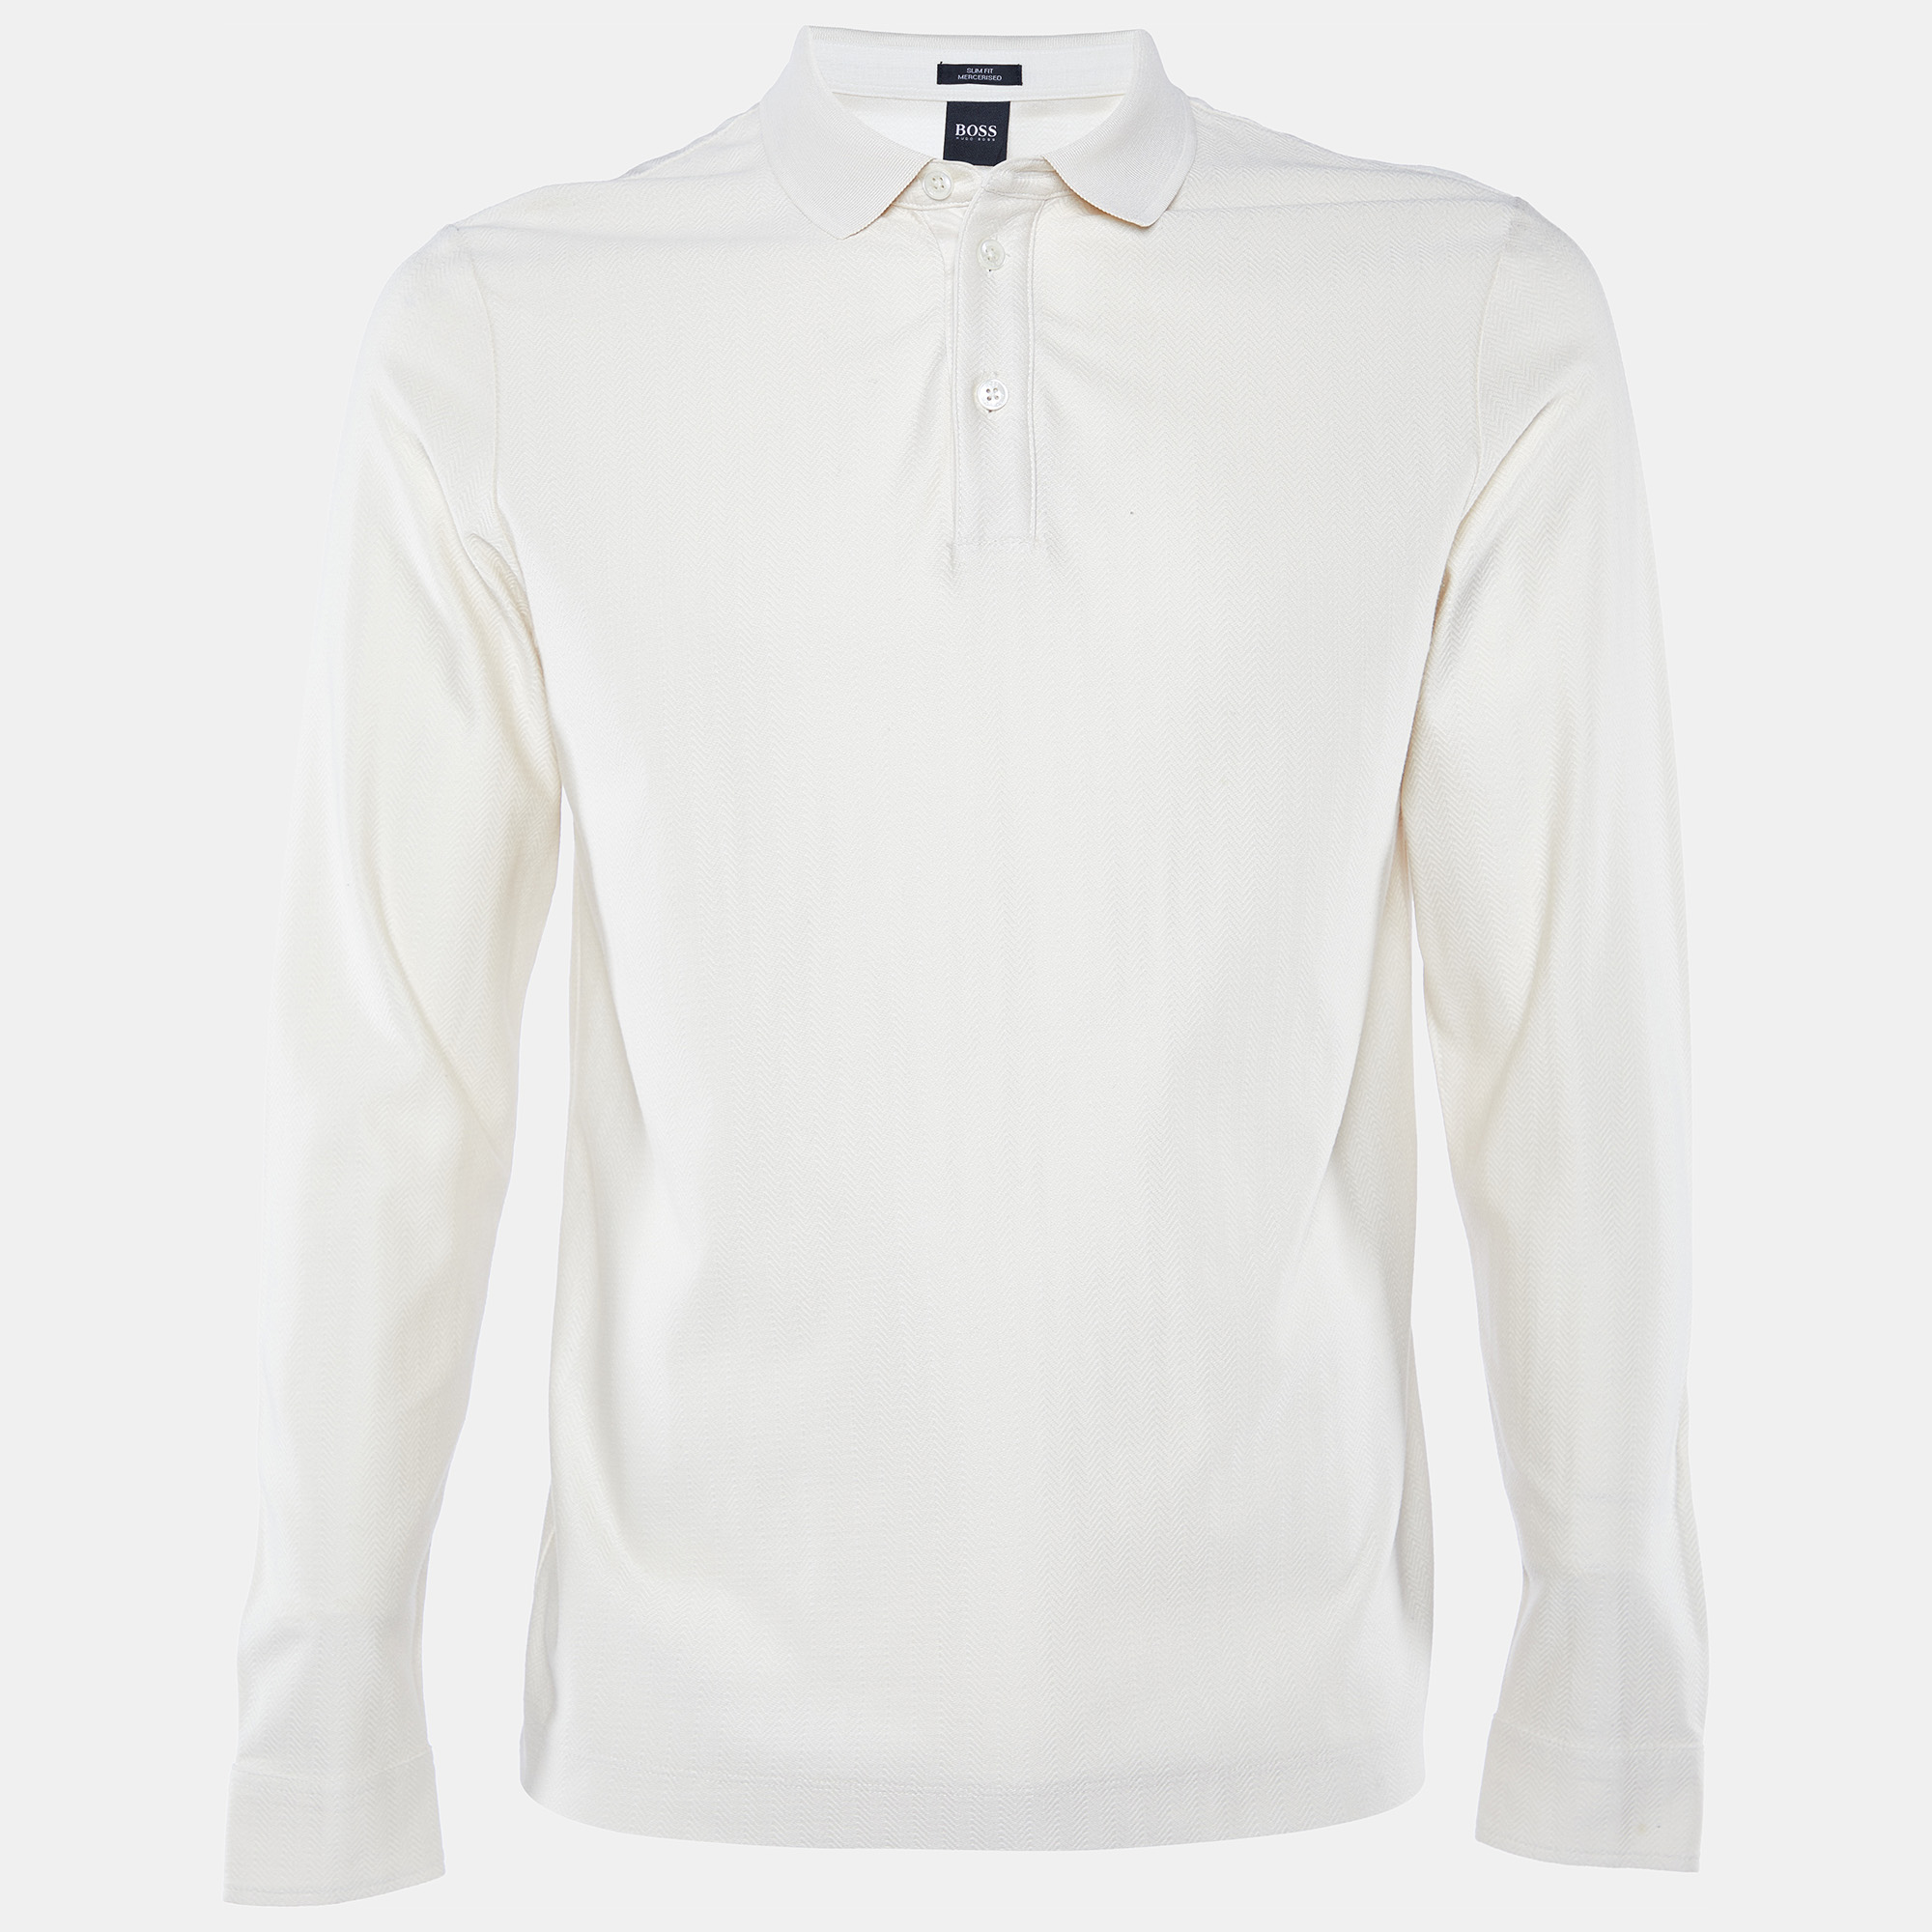 

Boss Hugo Boss Beige Patterned Cotton Knit Long Sleeve T-Shirt, Cream